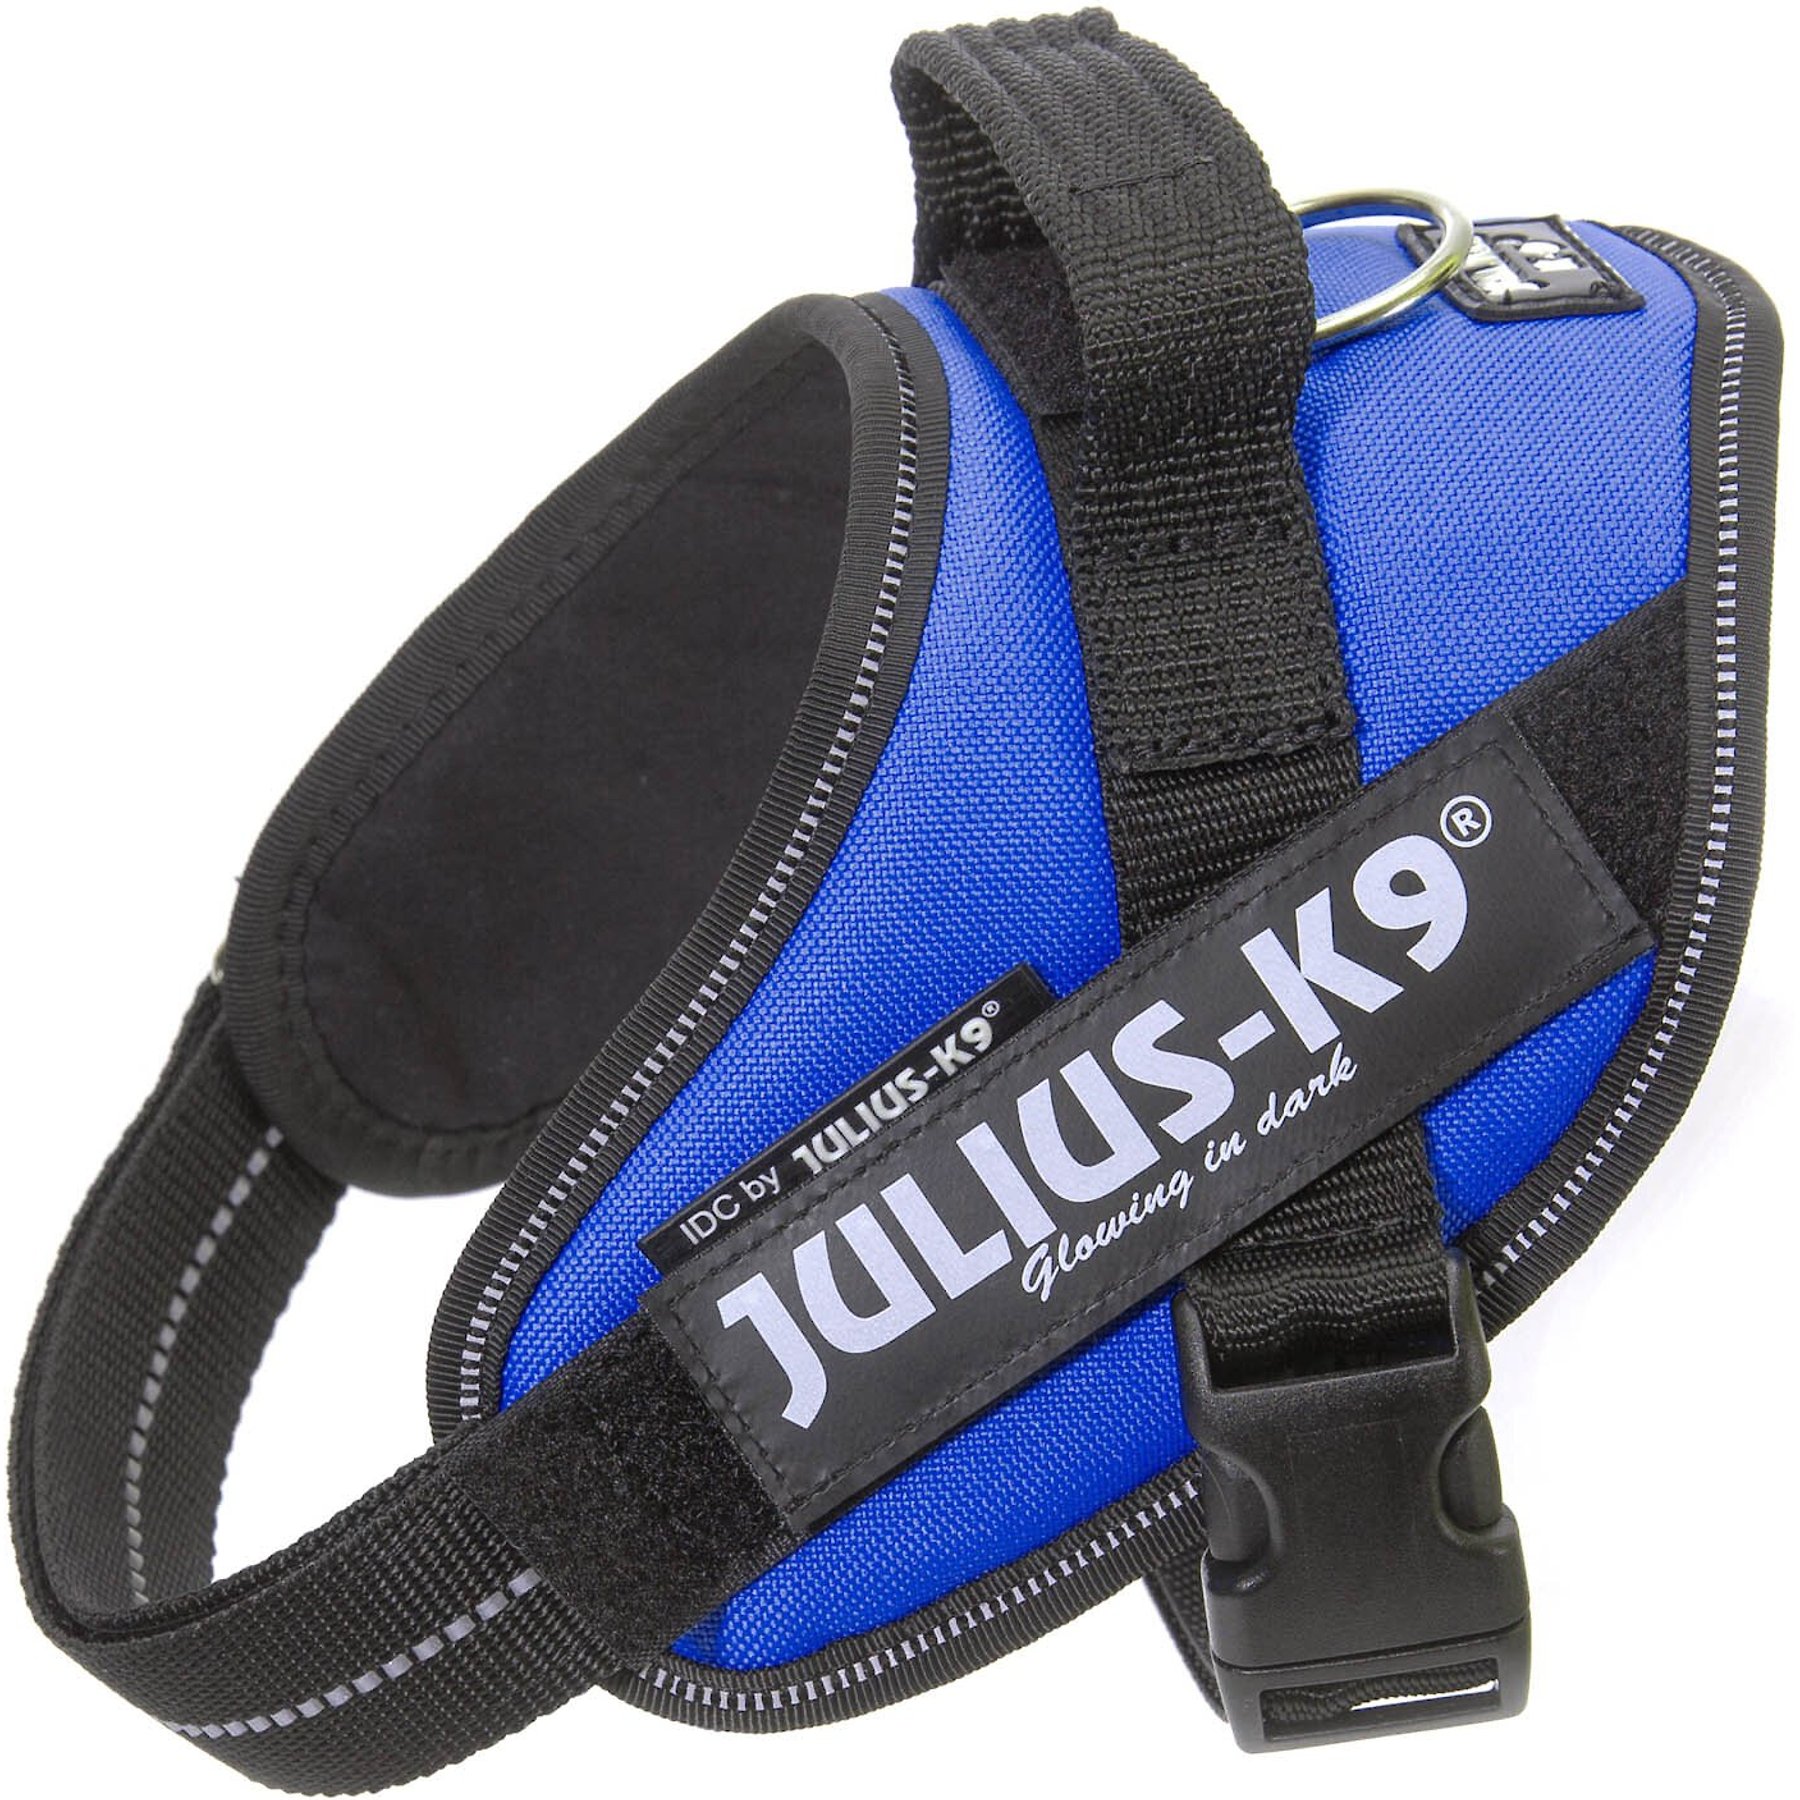 JULIUS-K9 IDC Powerharness Nylon Reflective No Pull Dog Harness